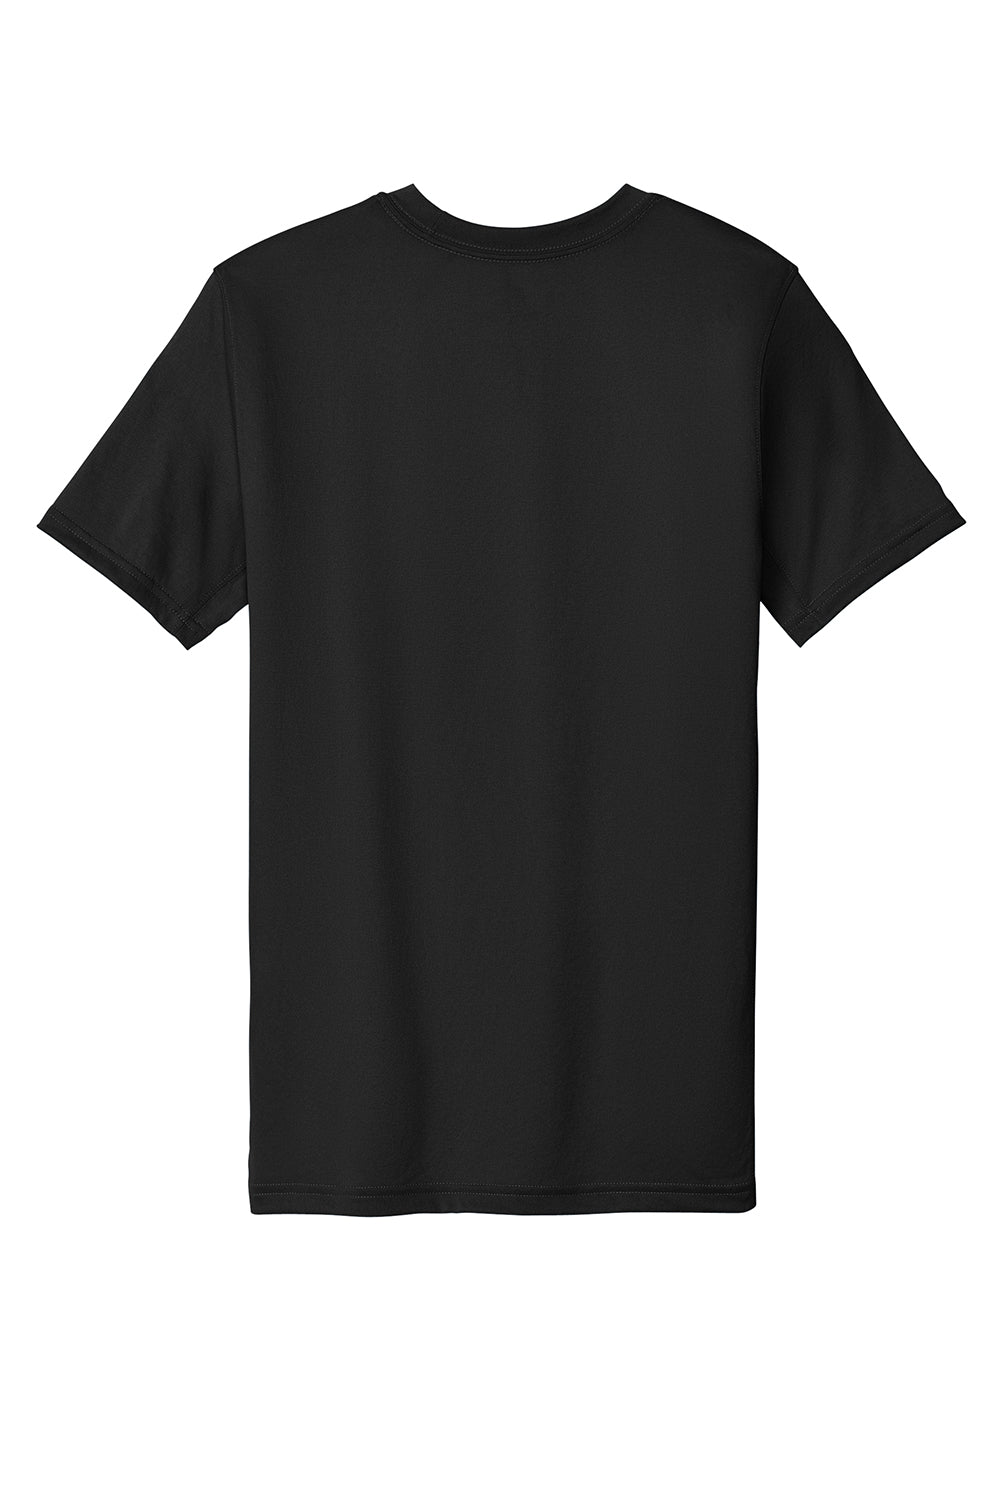 Nike NKDX8730 Mens rLegend Dri-Fit Moisture Wicking Short Sleeve Crewneck T-Shirt Black Flat Back